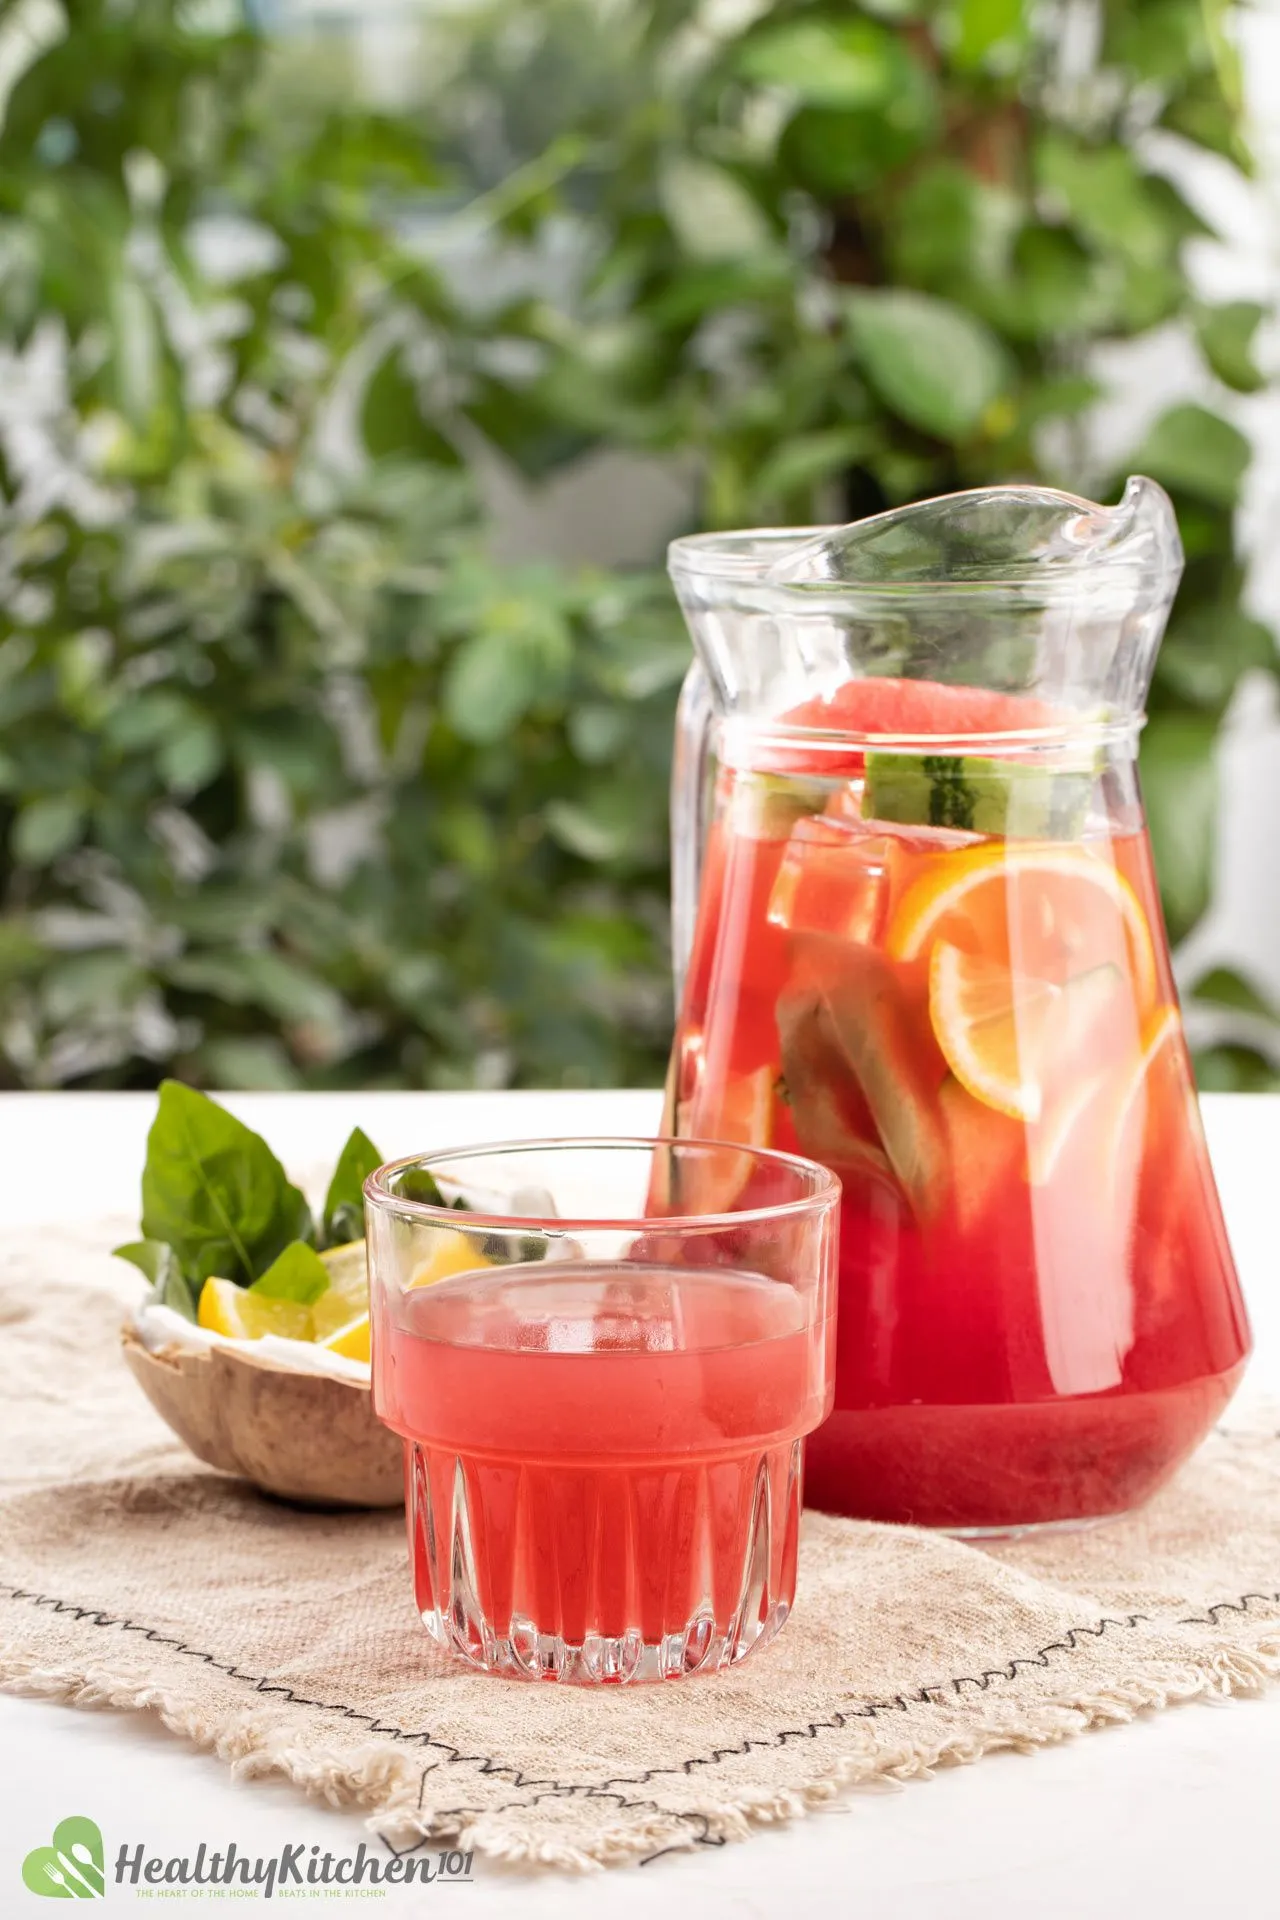 Watermelon Jungle Juice Recipe: A Lower-Calorie Rum & Vodka Punch